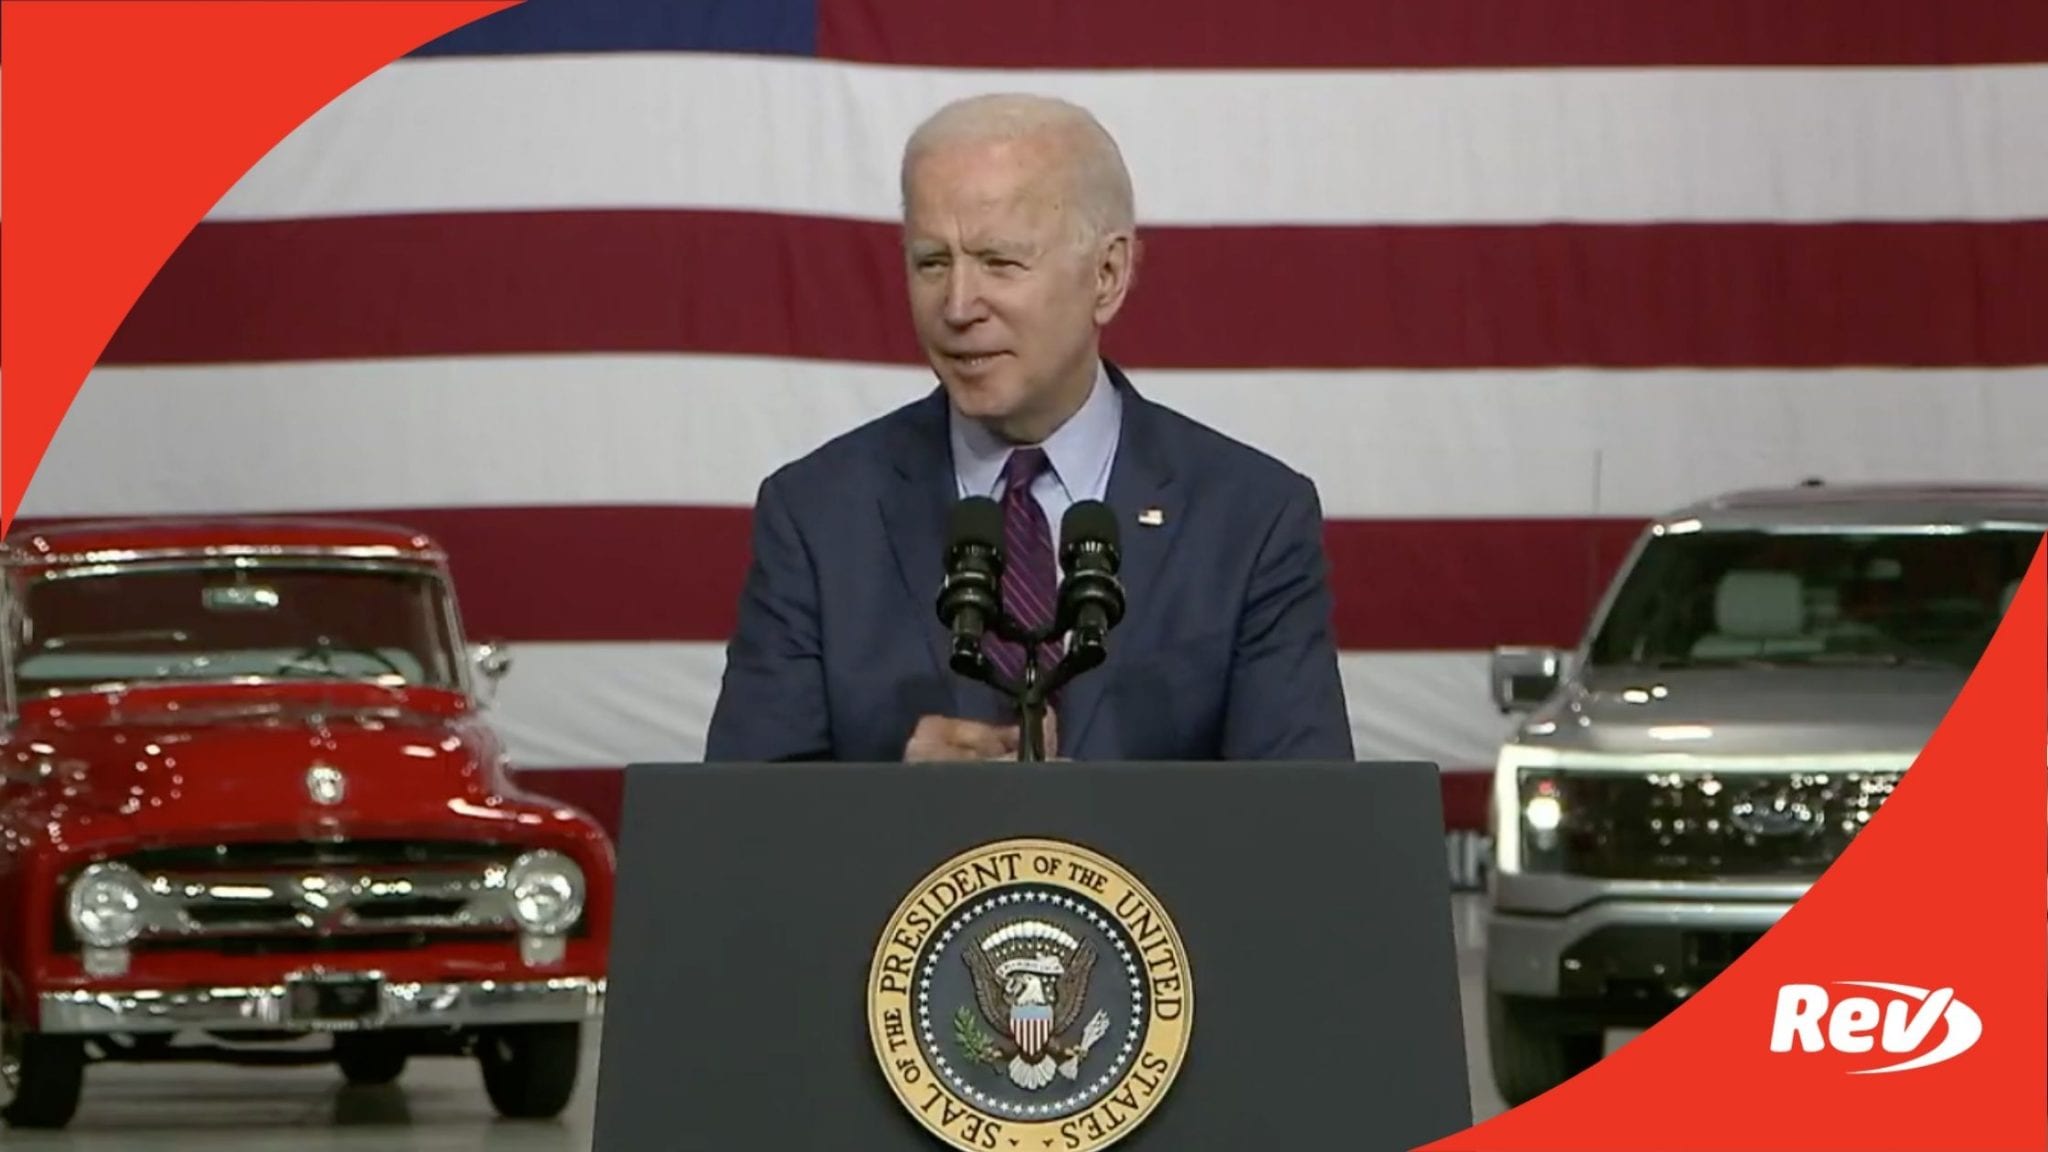 Joe Biden Ford Electric Vehicle Center Speech Transcript May 18